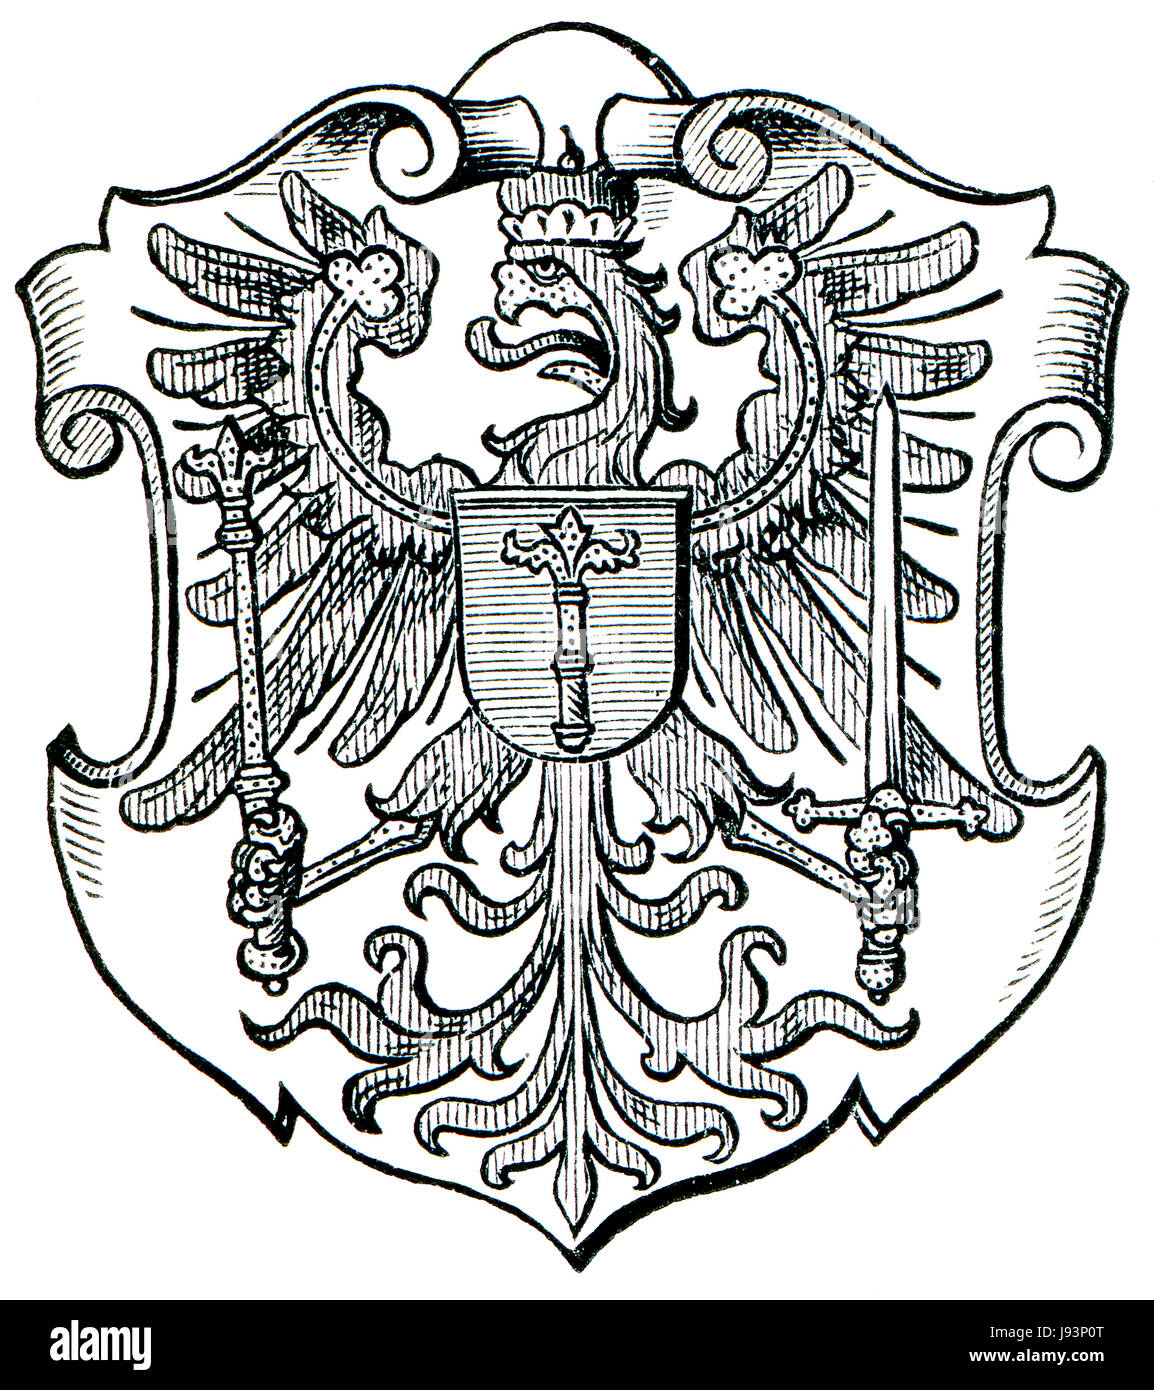 brandenburg, prussia, province, kingdom, engraving, historical, antique, black, Stock Photo